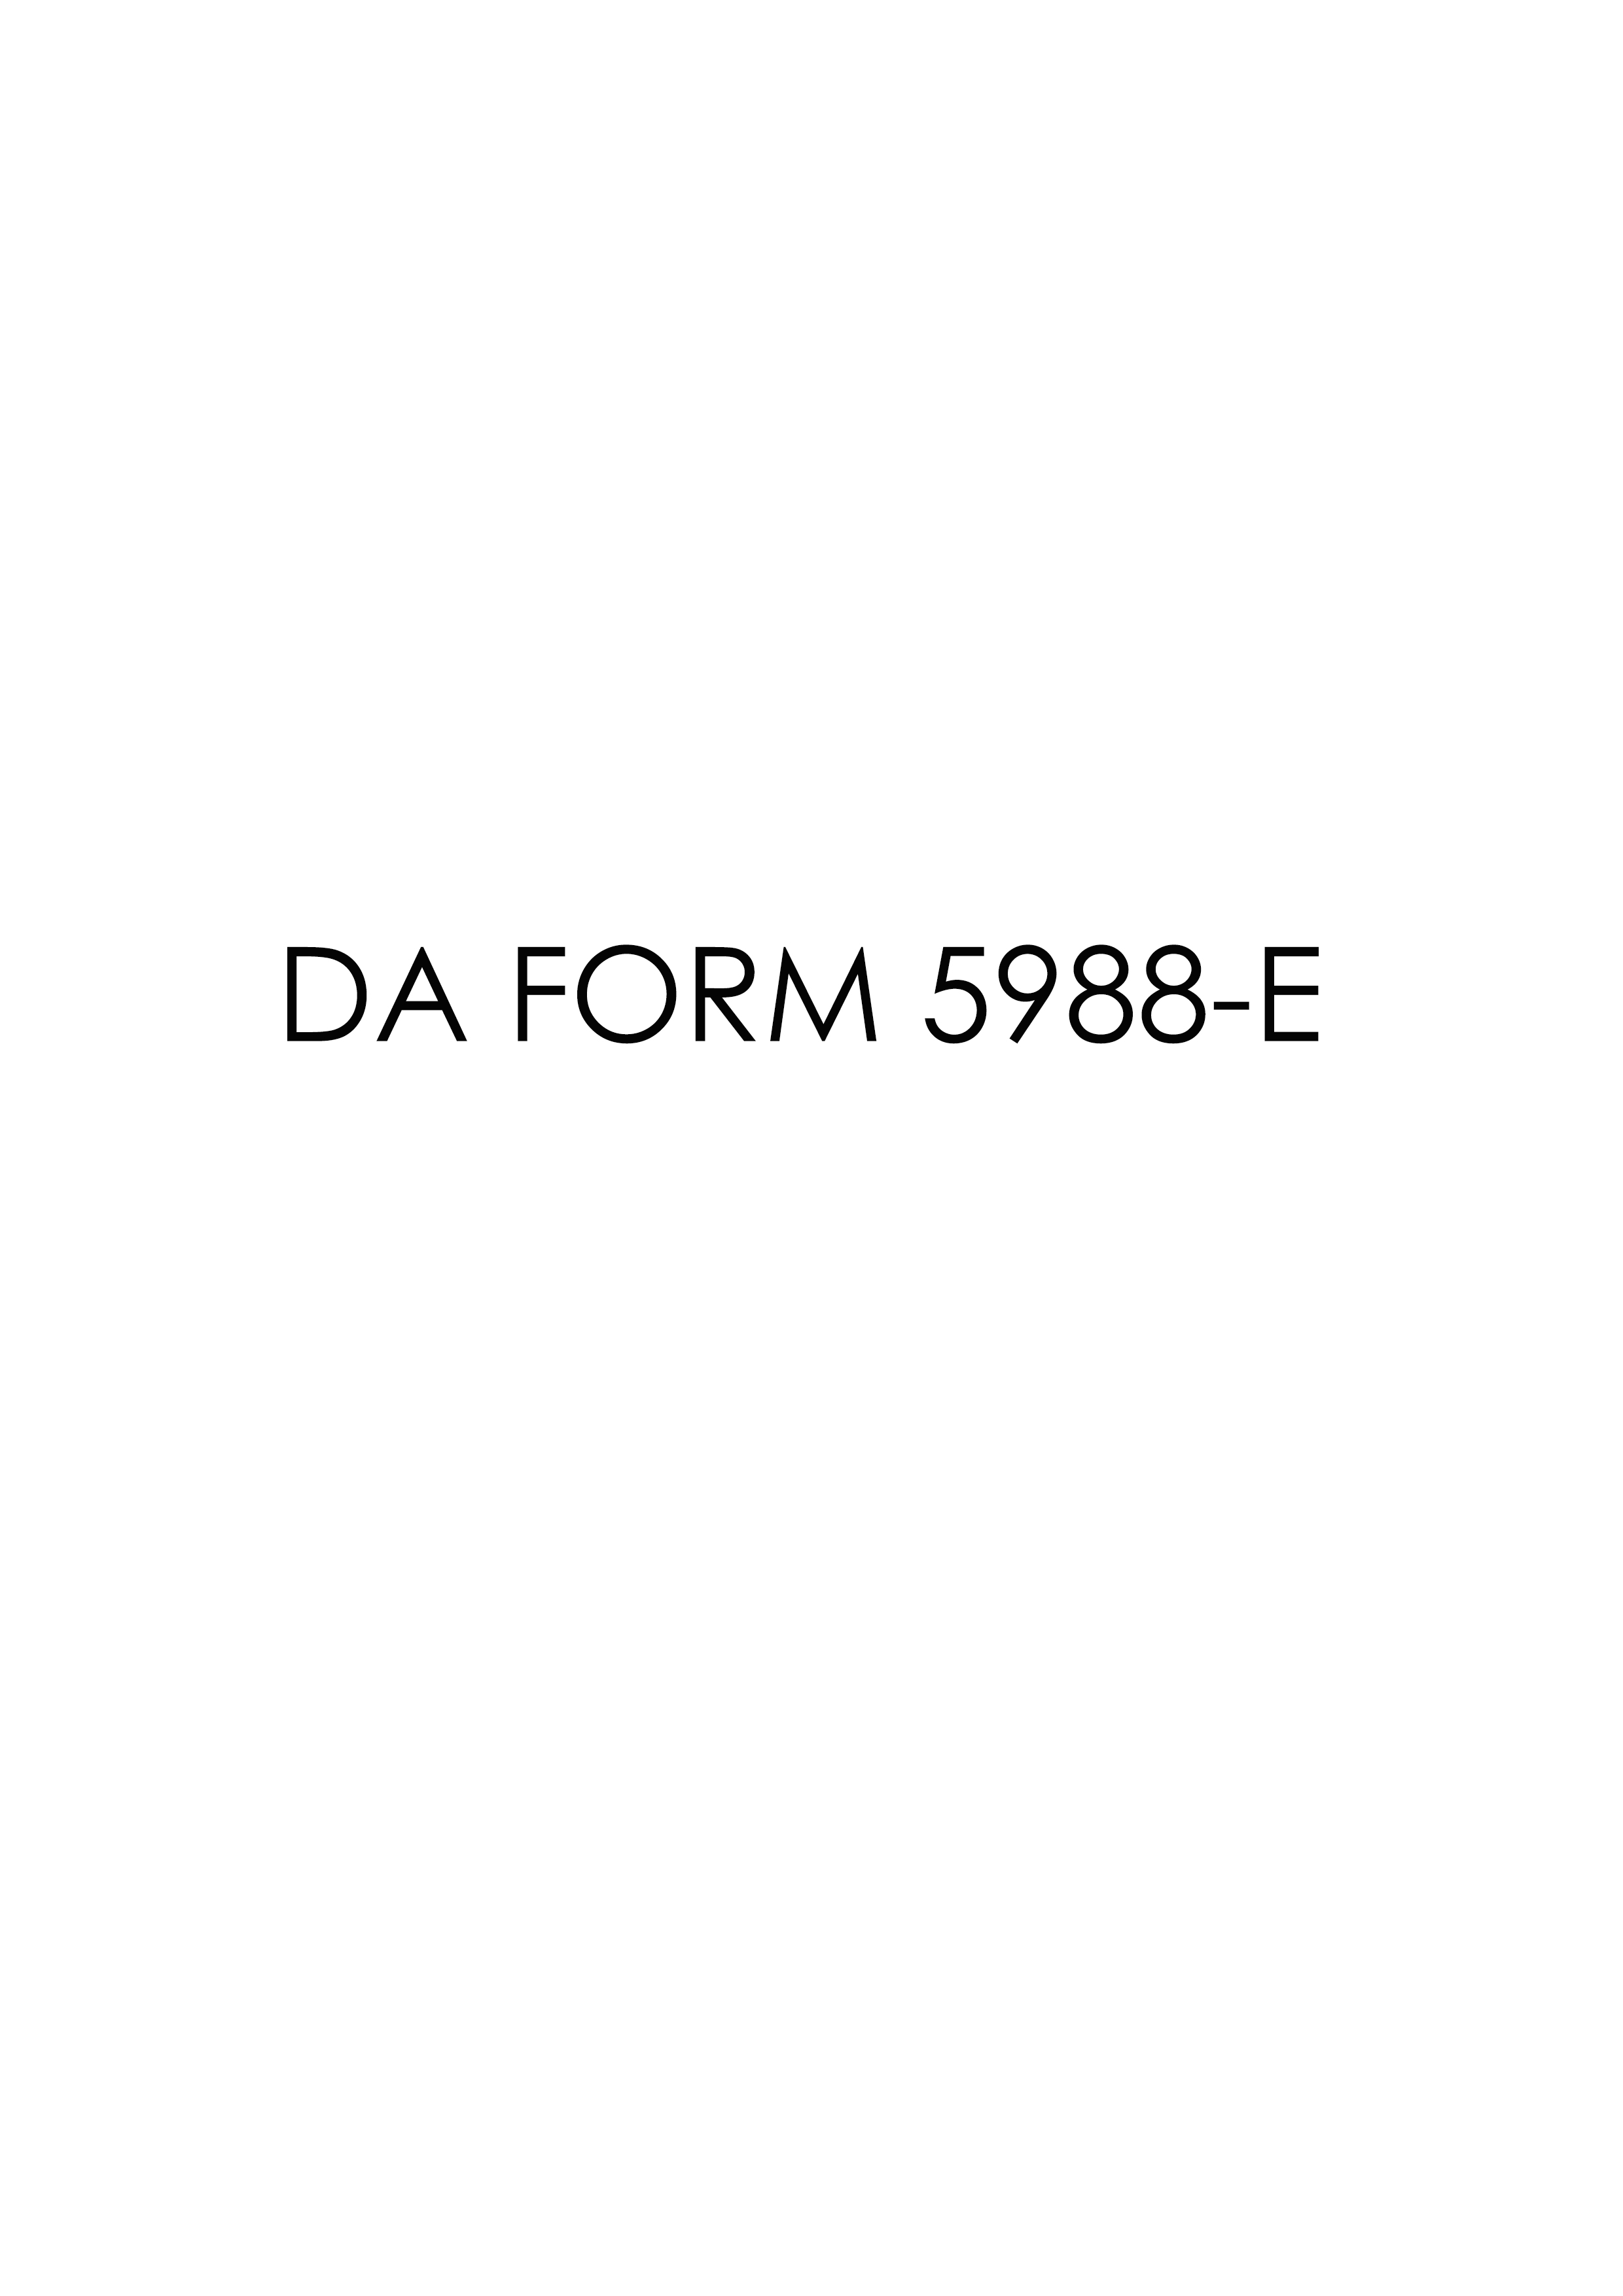 da Form 5988-E fillable